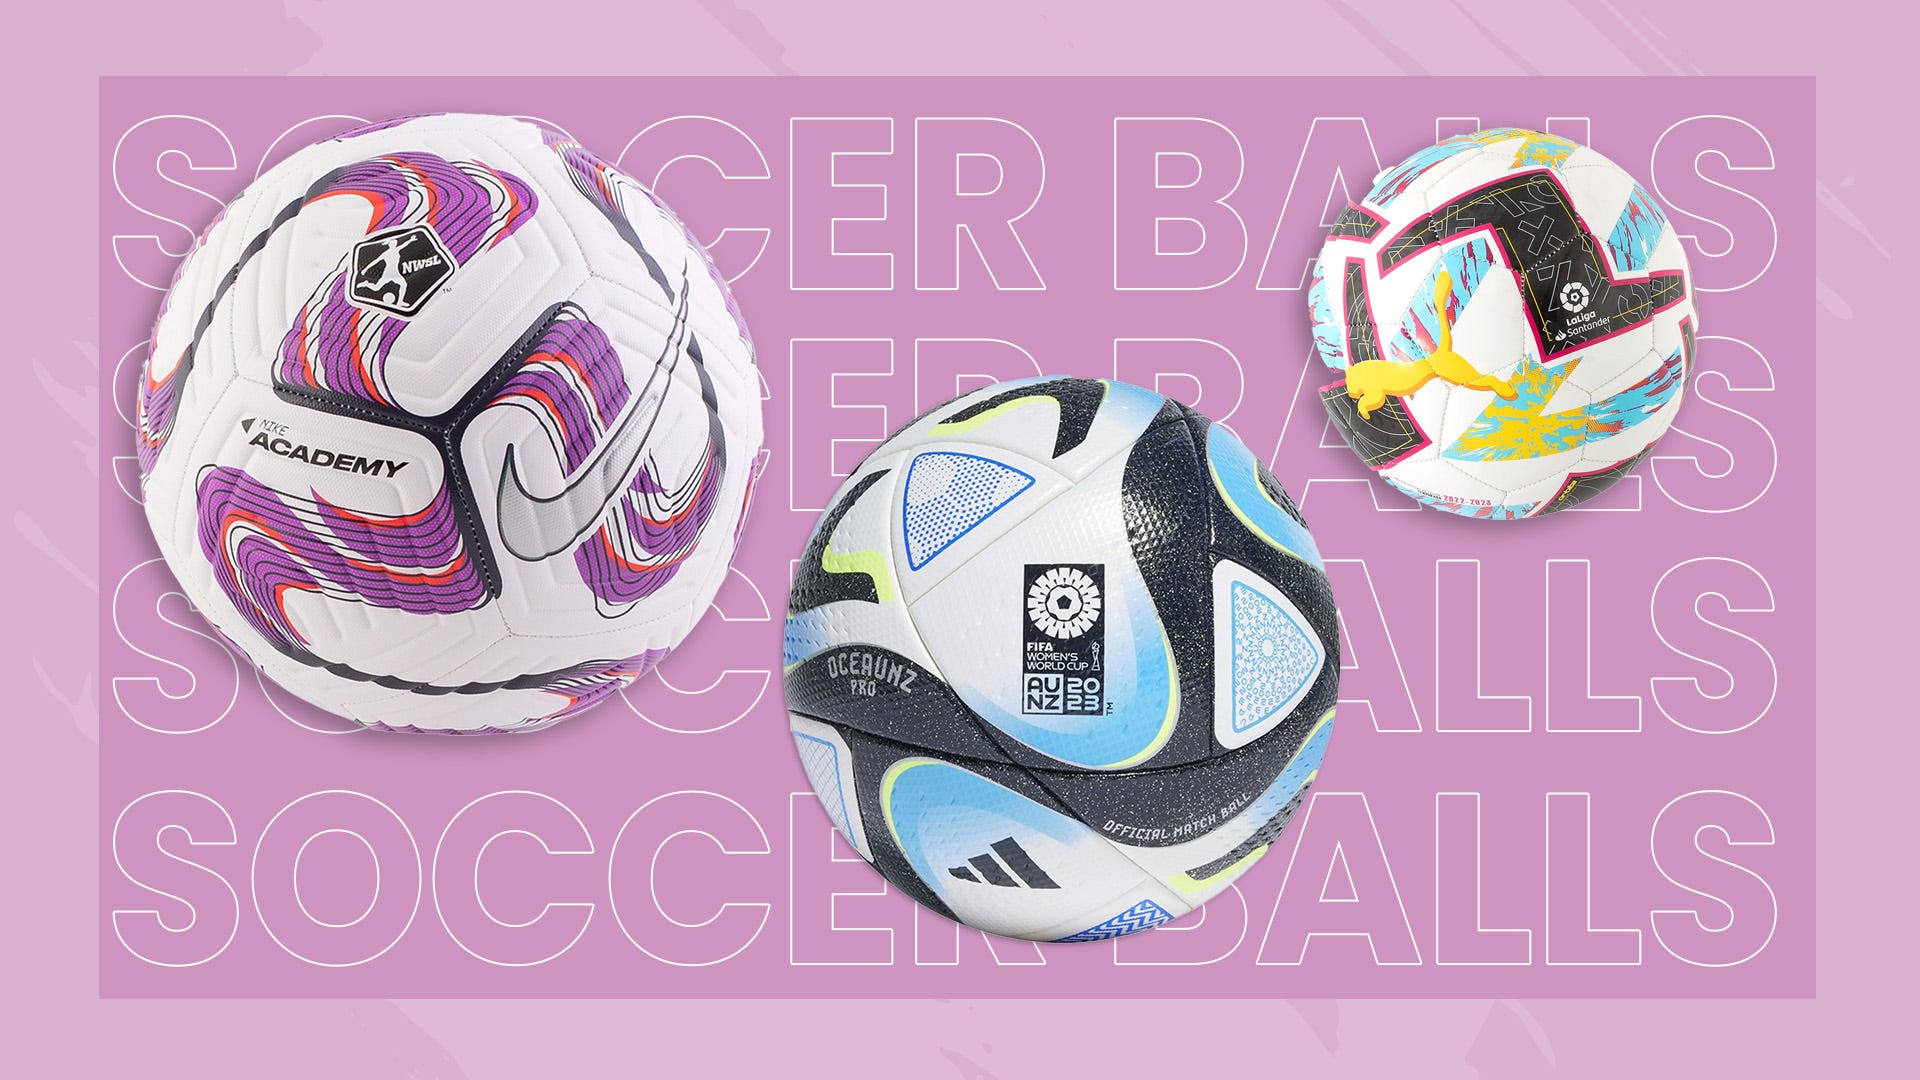 Soccer Balls  : Score Big with Top-Brand Balls.